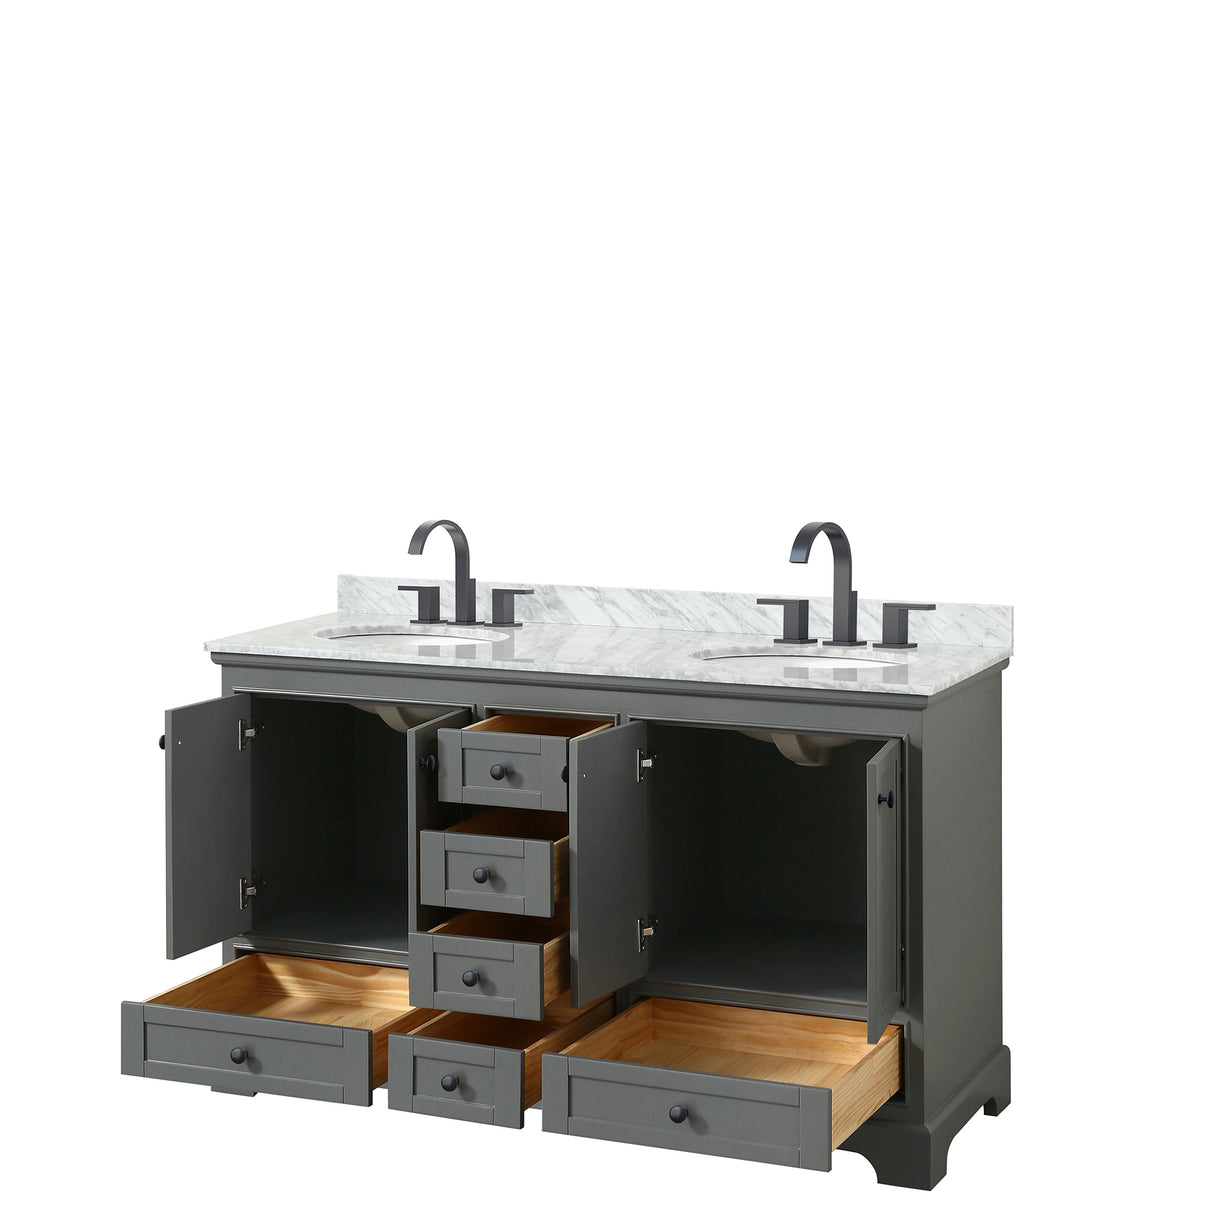 Deborah 60 Inch Double Bathroom Vanity in Dark Gray White Carrara Marble Countertop Undermount Oval Sinks Matte Black Trim